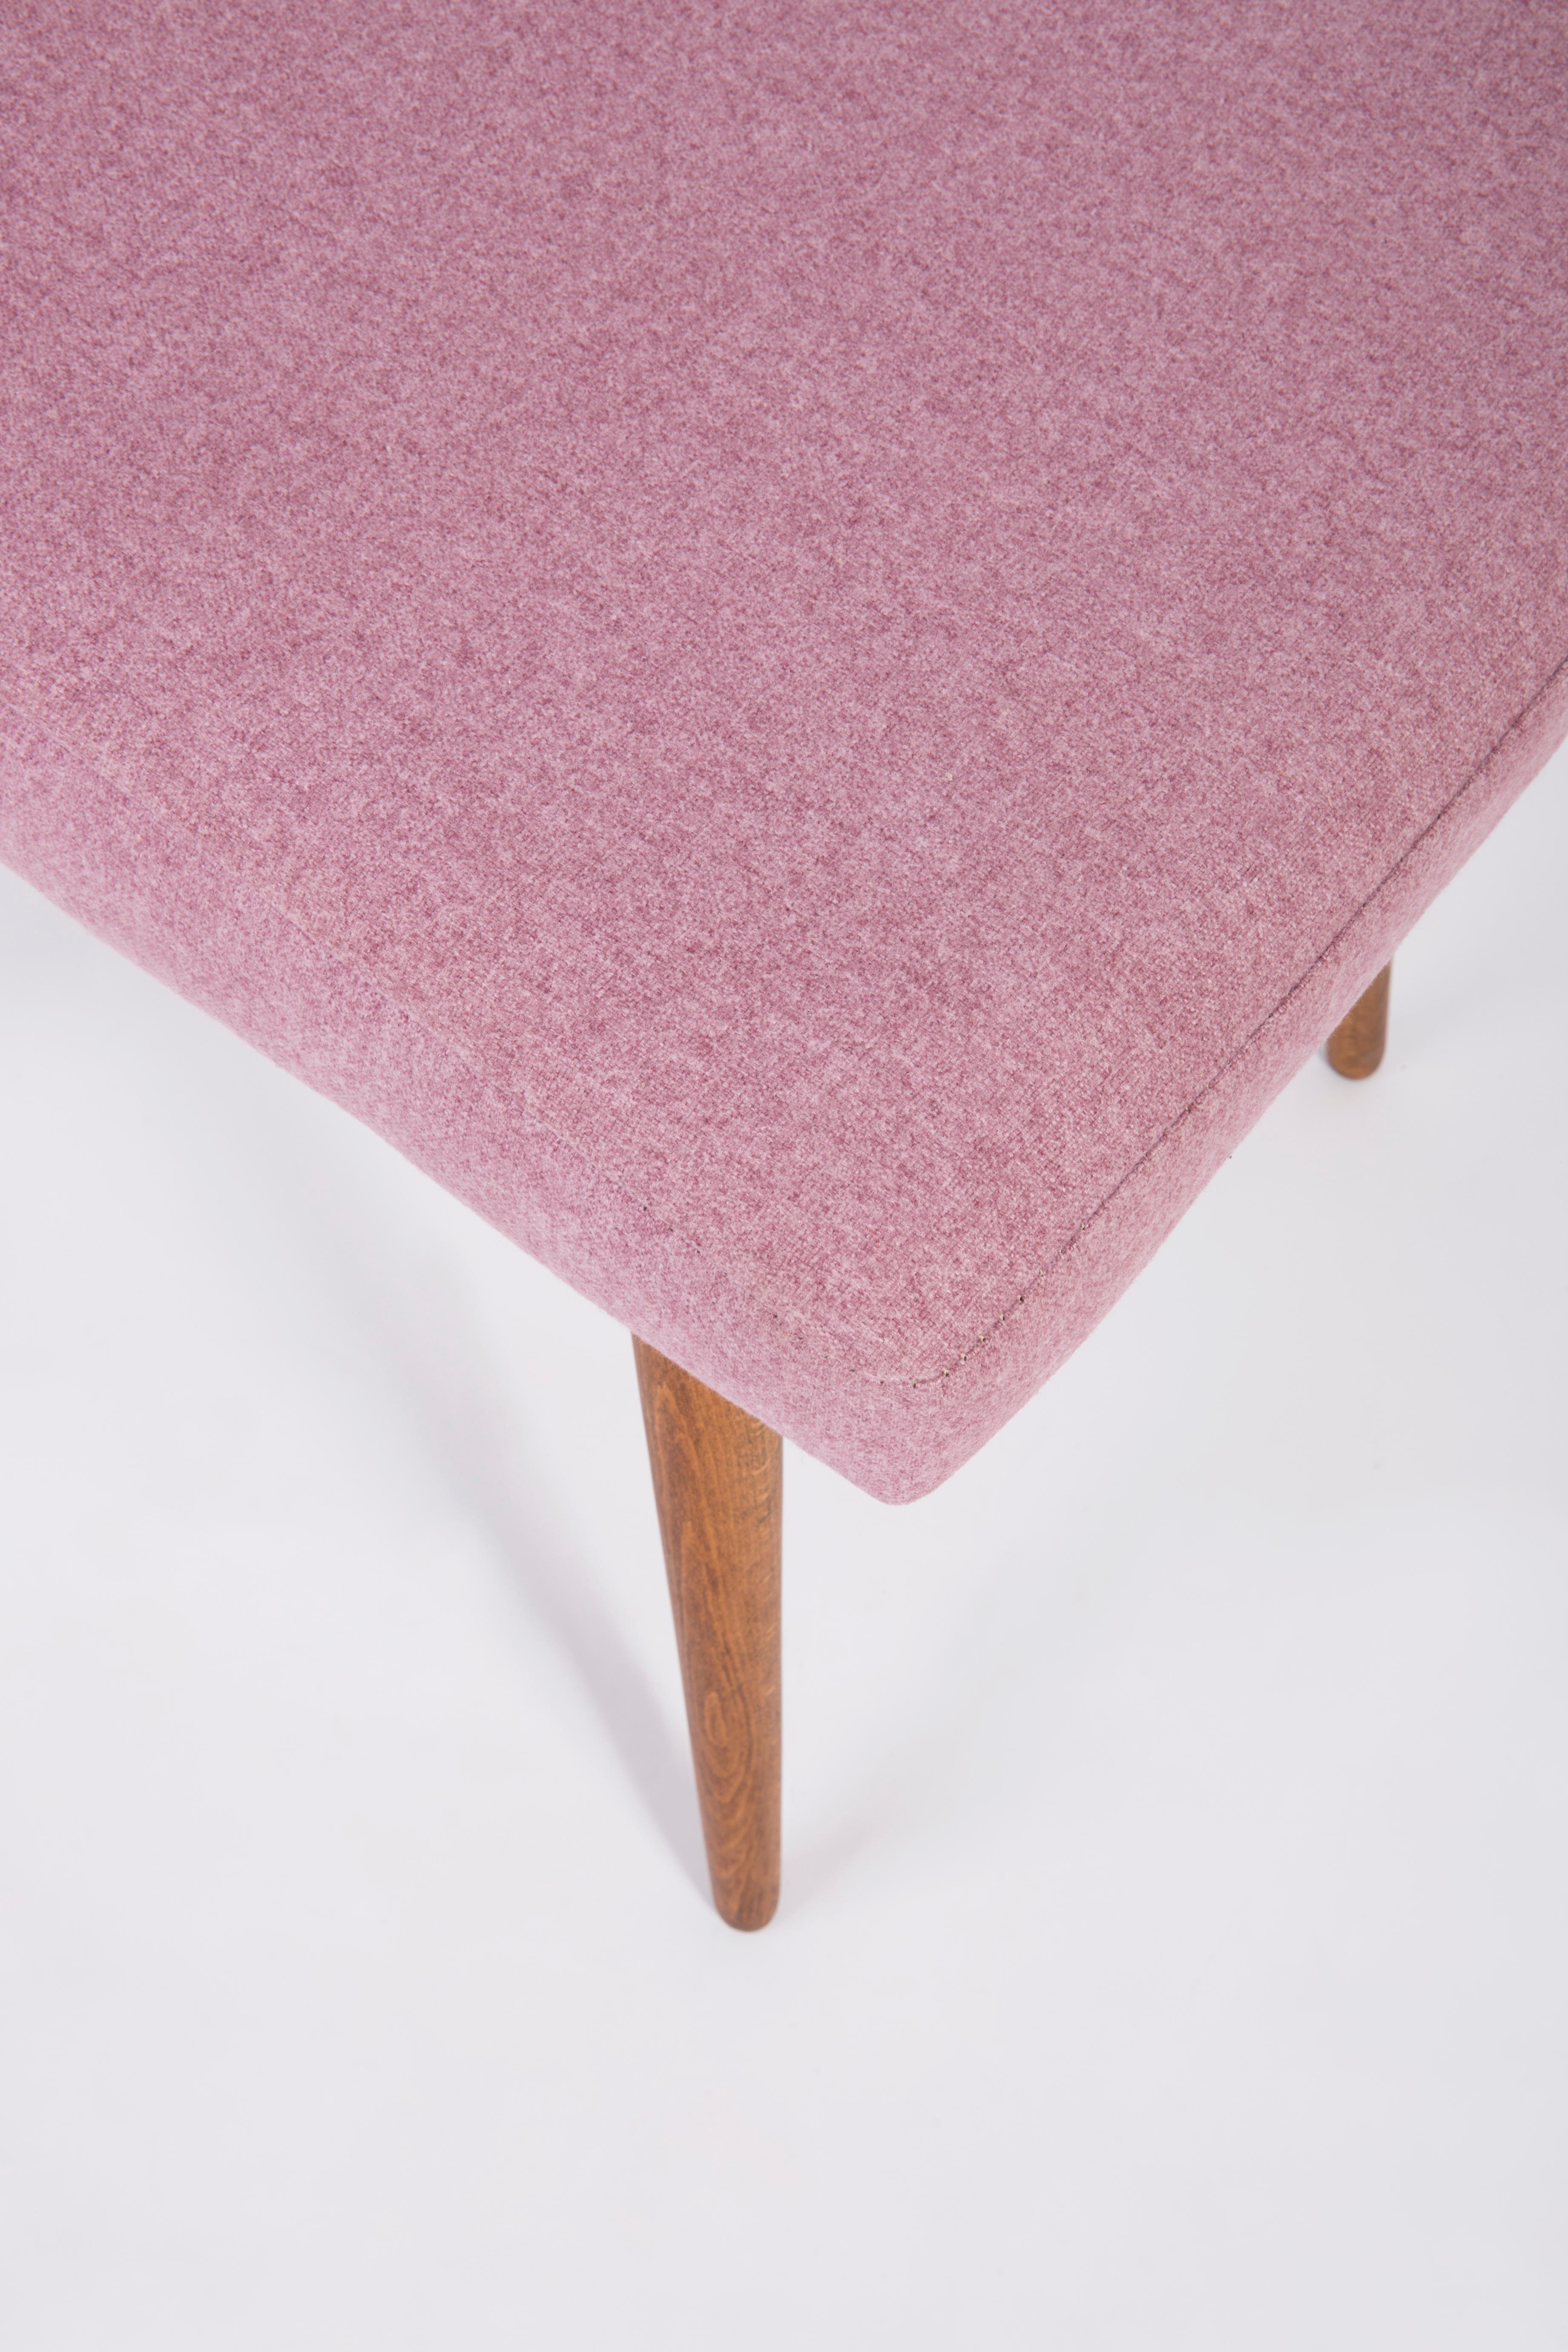 Polish 20th Century Pink Mélange Rajmund Halas Chair, 1960s For Sale